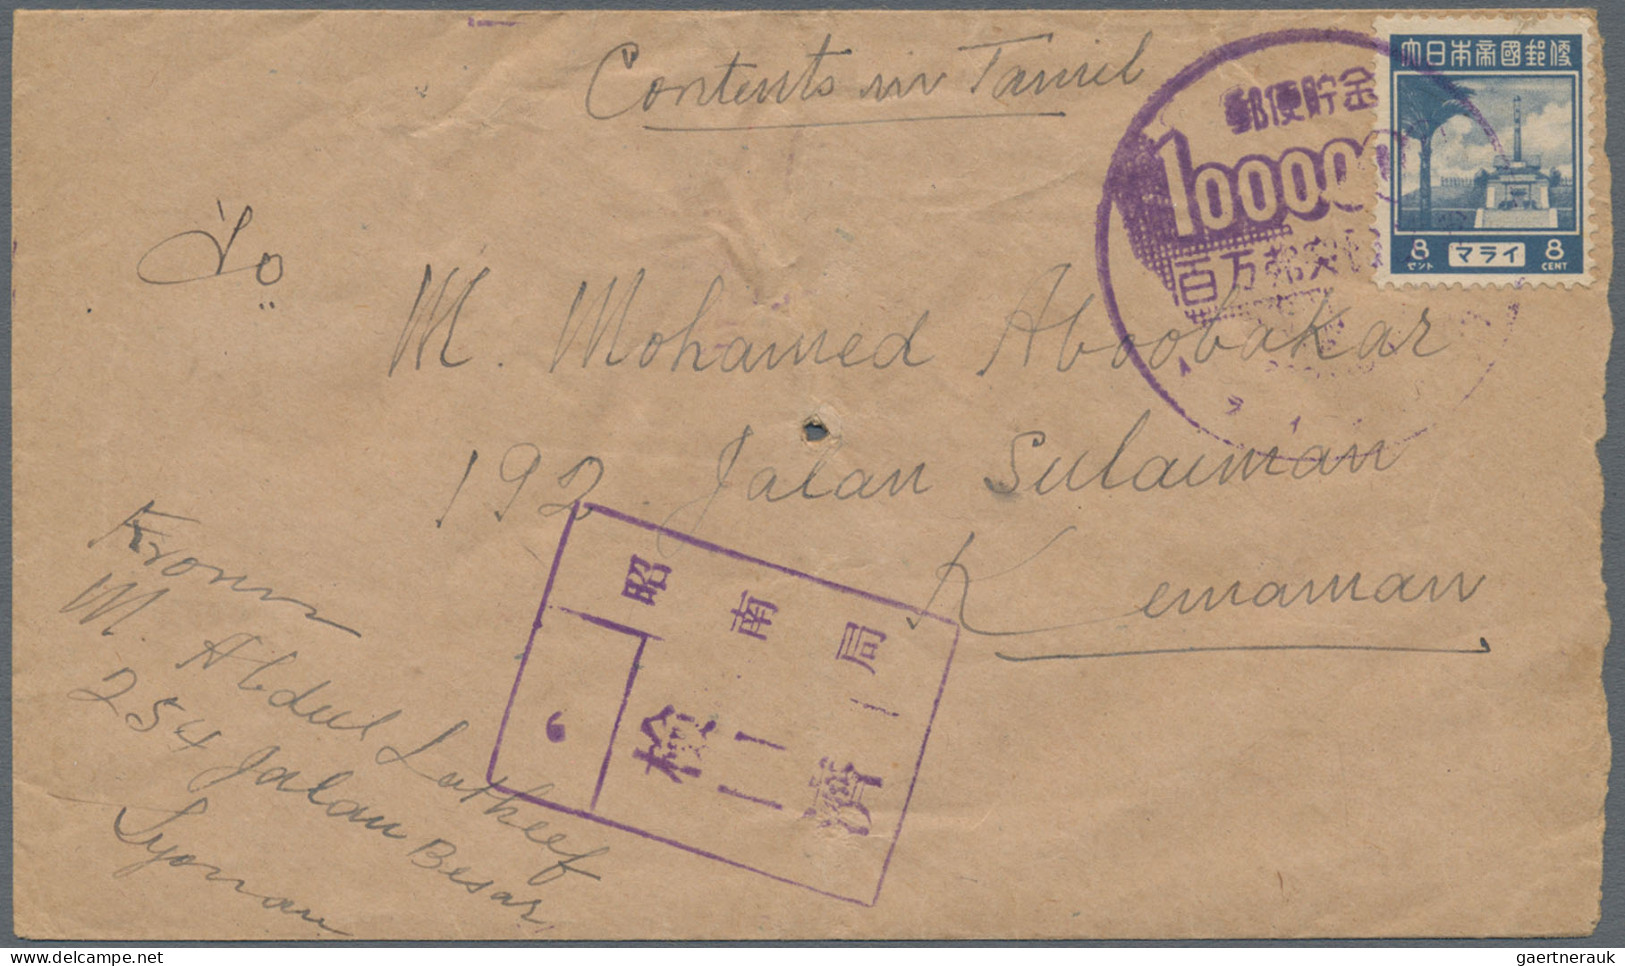 Japanense Occupation of Malaya: 1942/1945, dealer stock of covers, postal statio